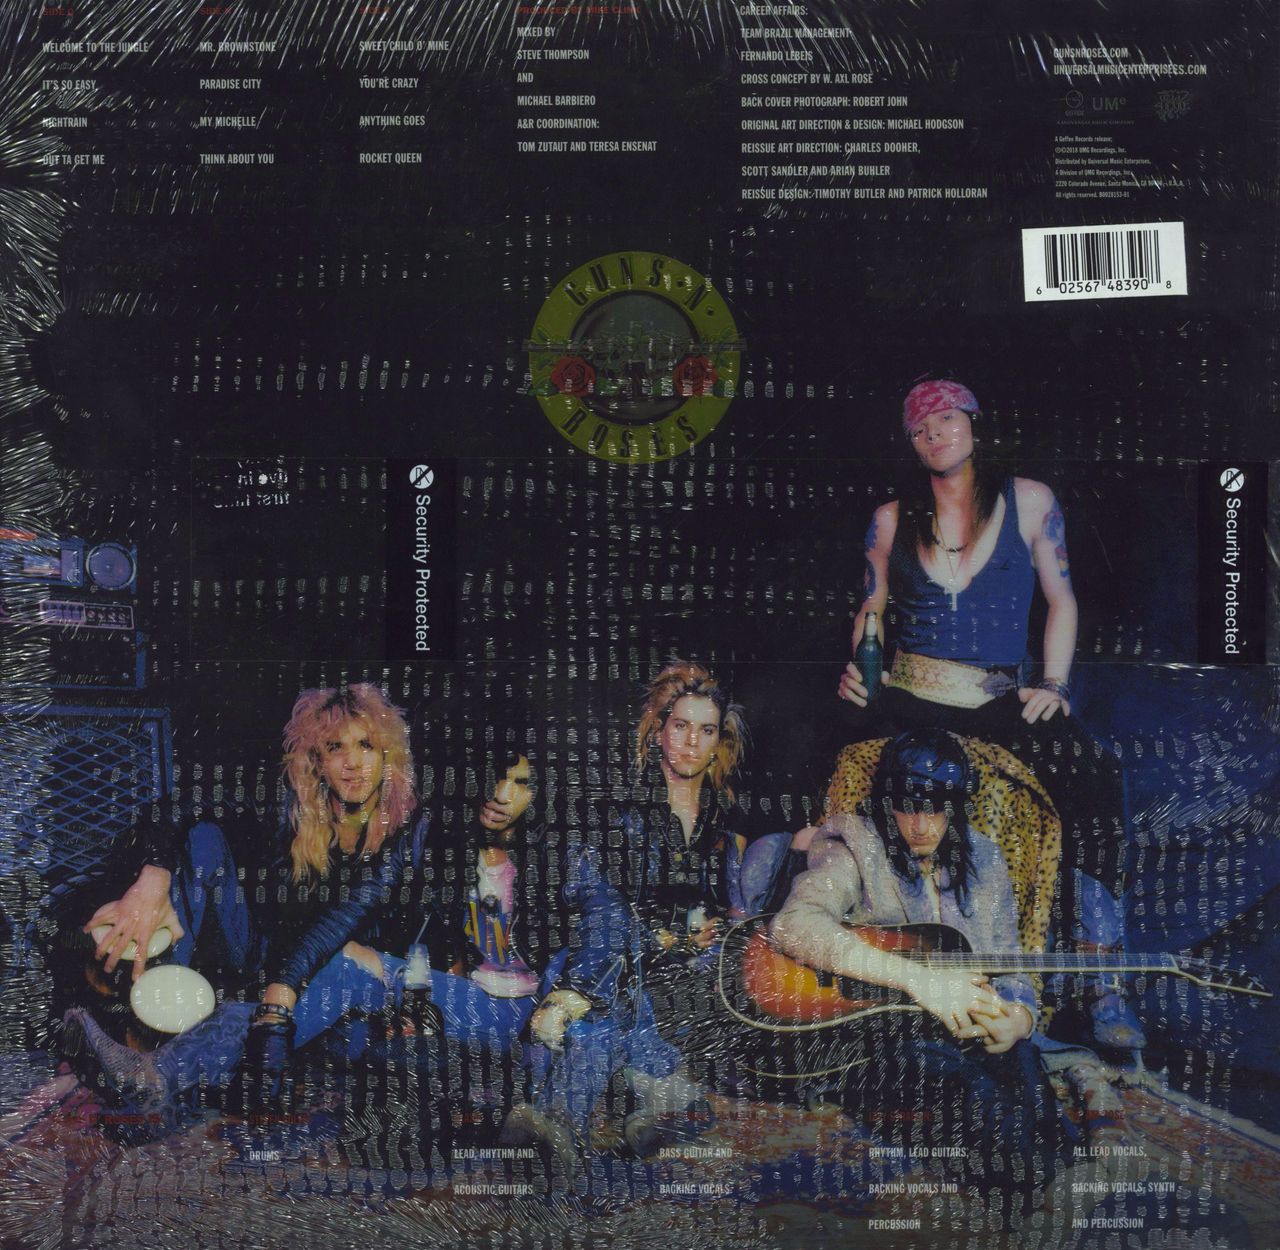 Guns N Roses Greatest Hits - Sealed UK CD album — RareVinyl.com